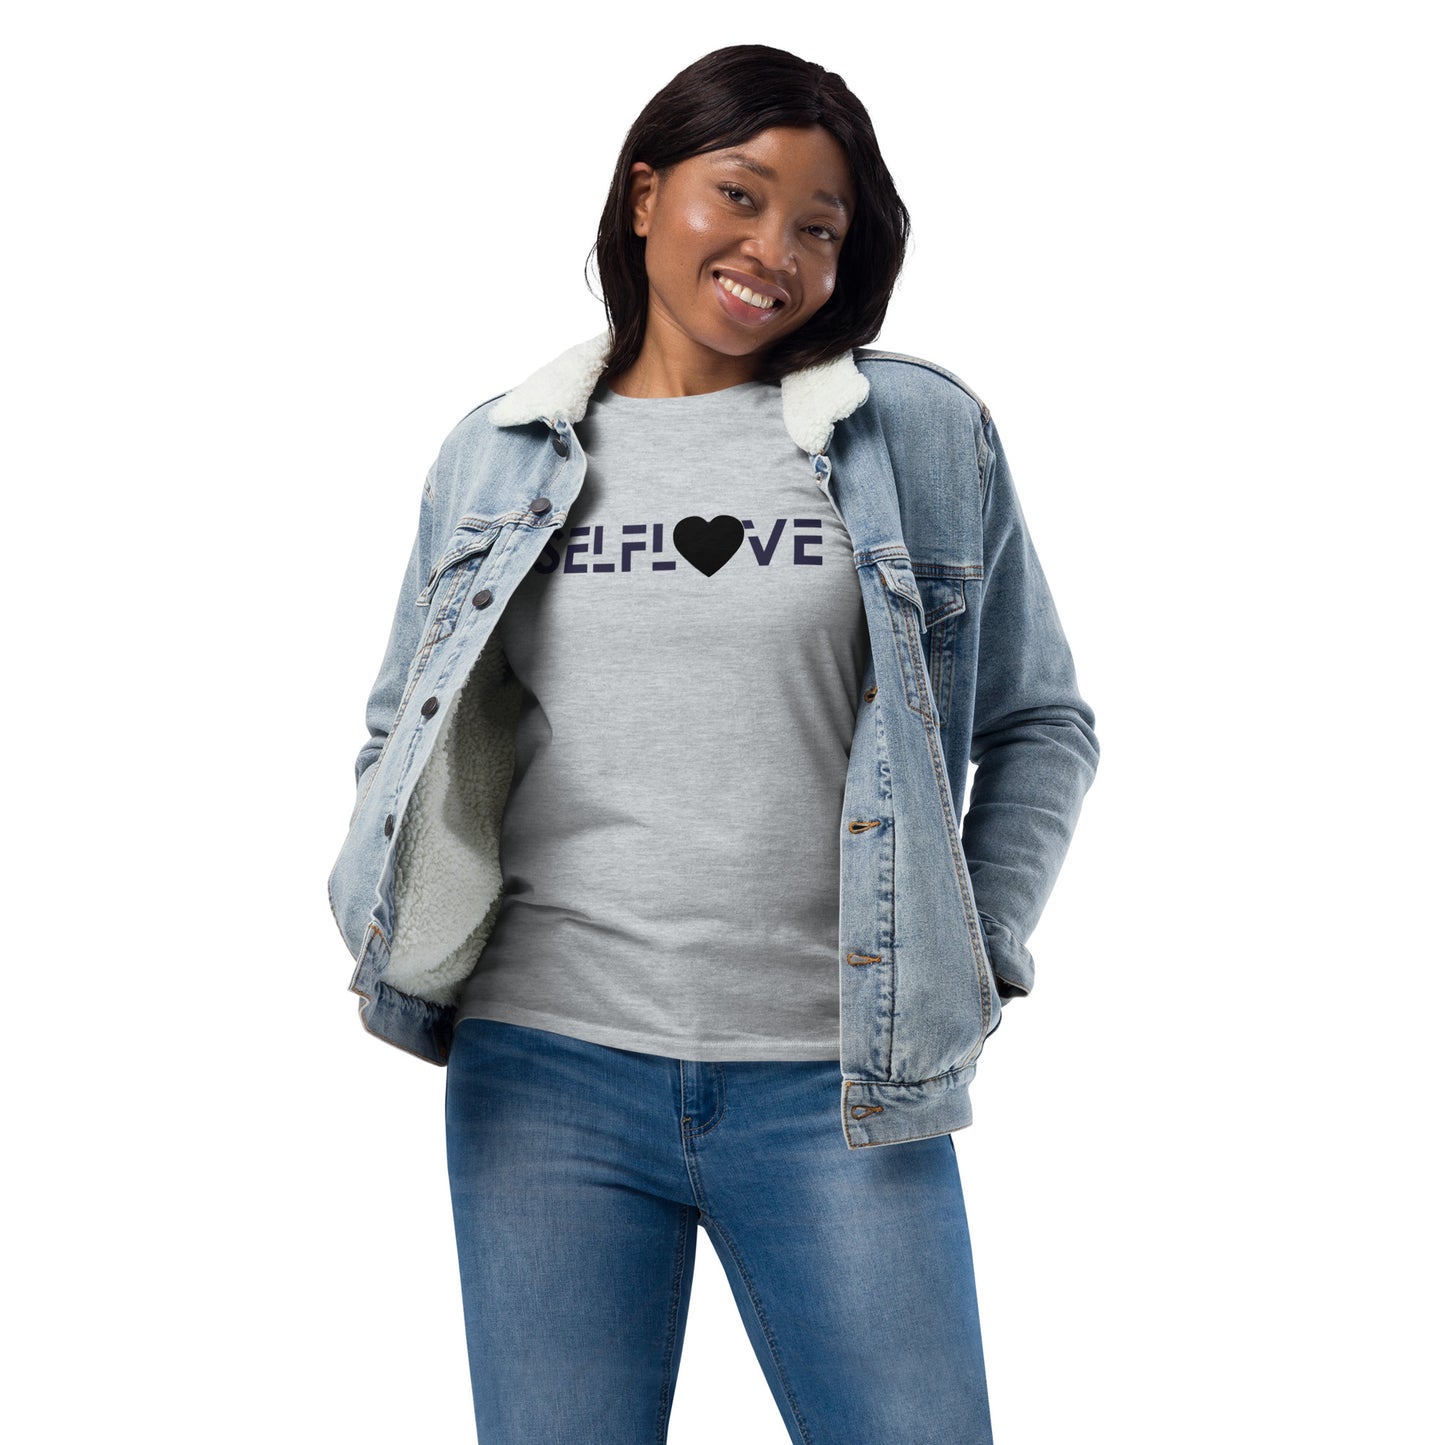 Unisex Self-Love long sleeve shirt